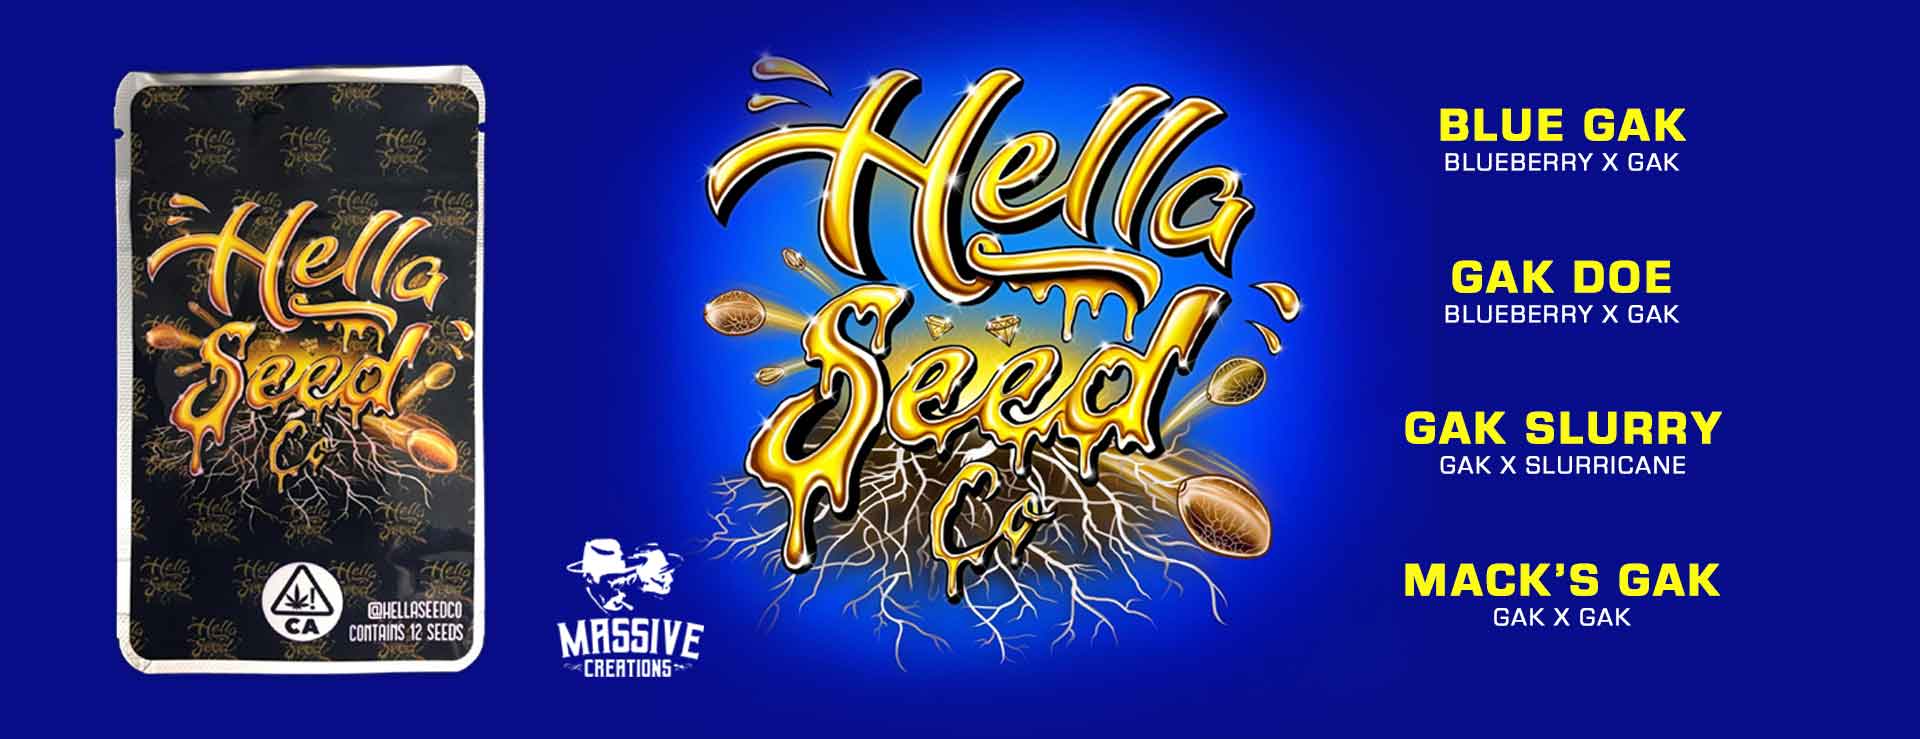 Hella Seed Co